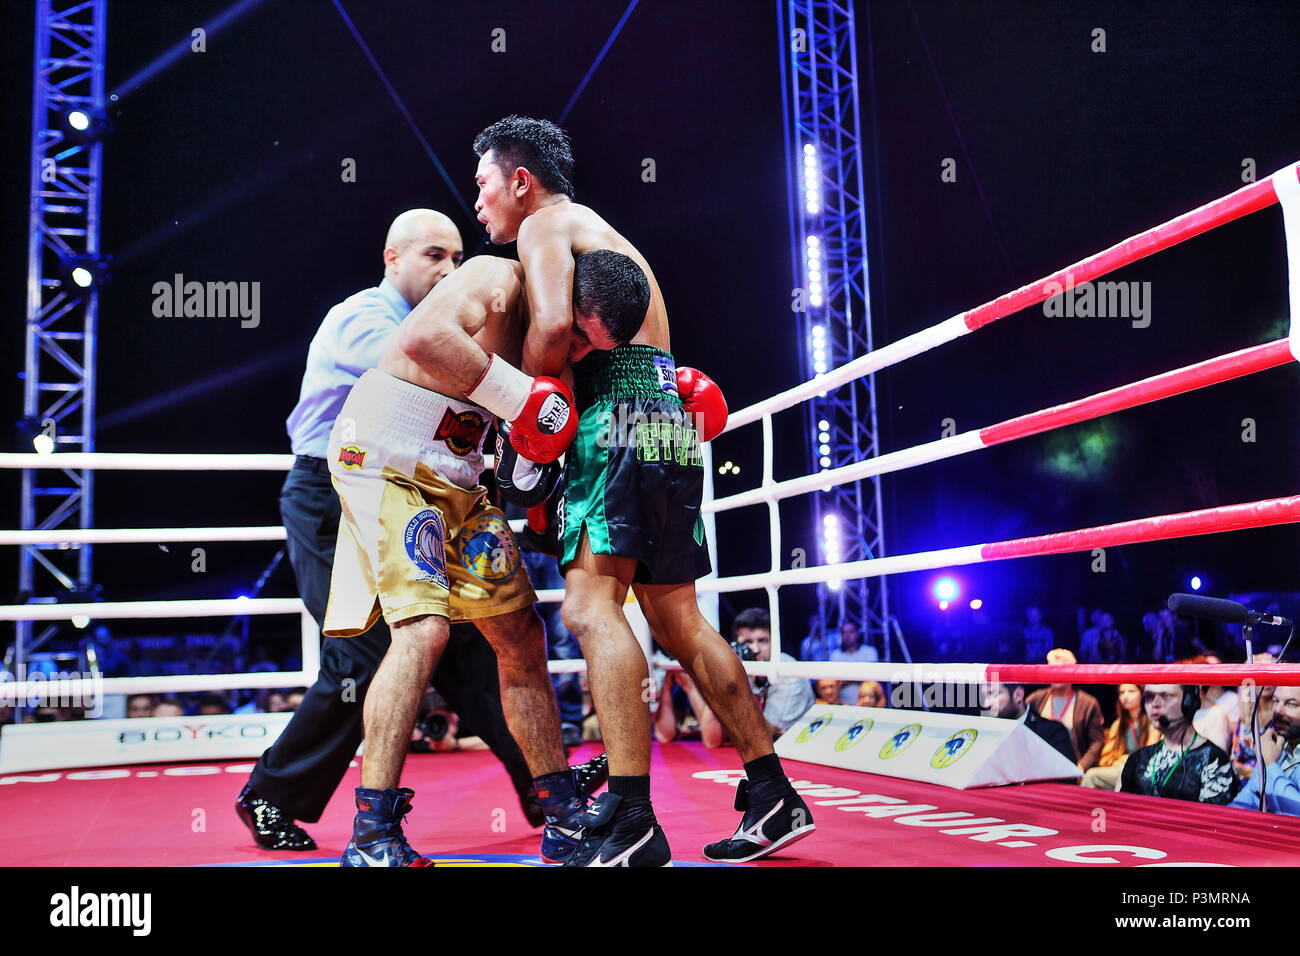 Guantes Boxeo adidas H25 Muay Thai Kick Boxing Original Pro